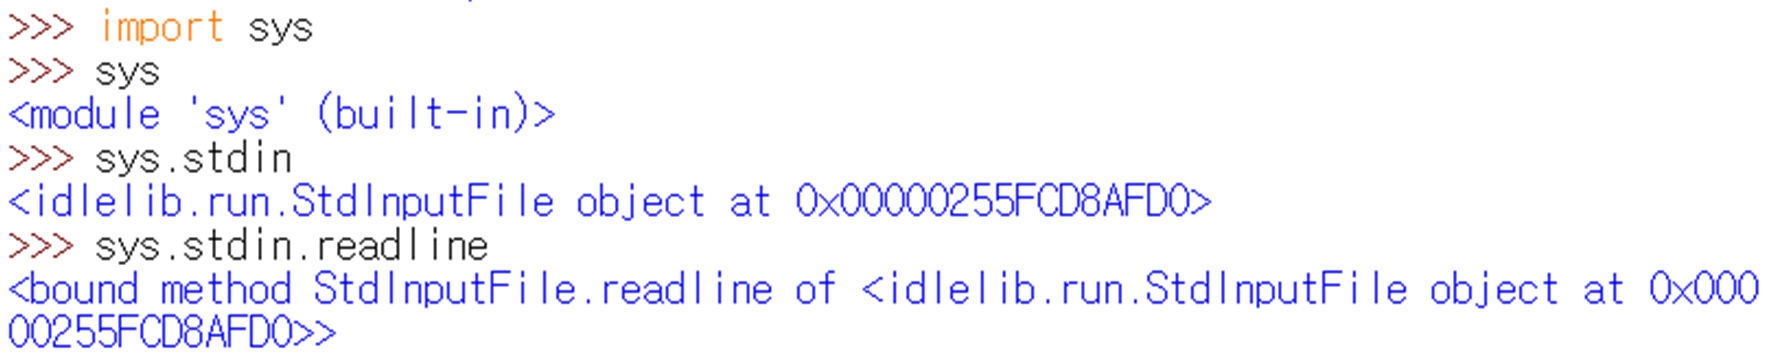 sys.stdin.readline 함수는 모듈 함수라는 것을 보여주는 이미지